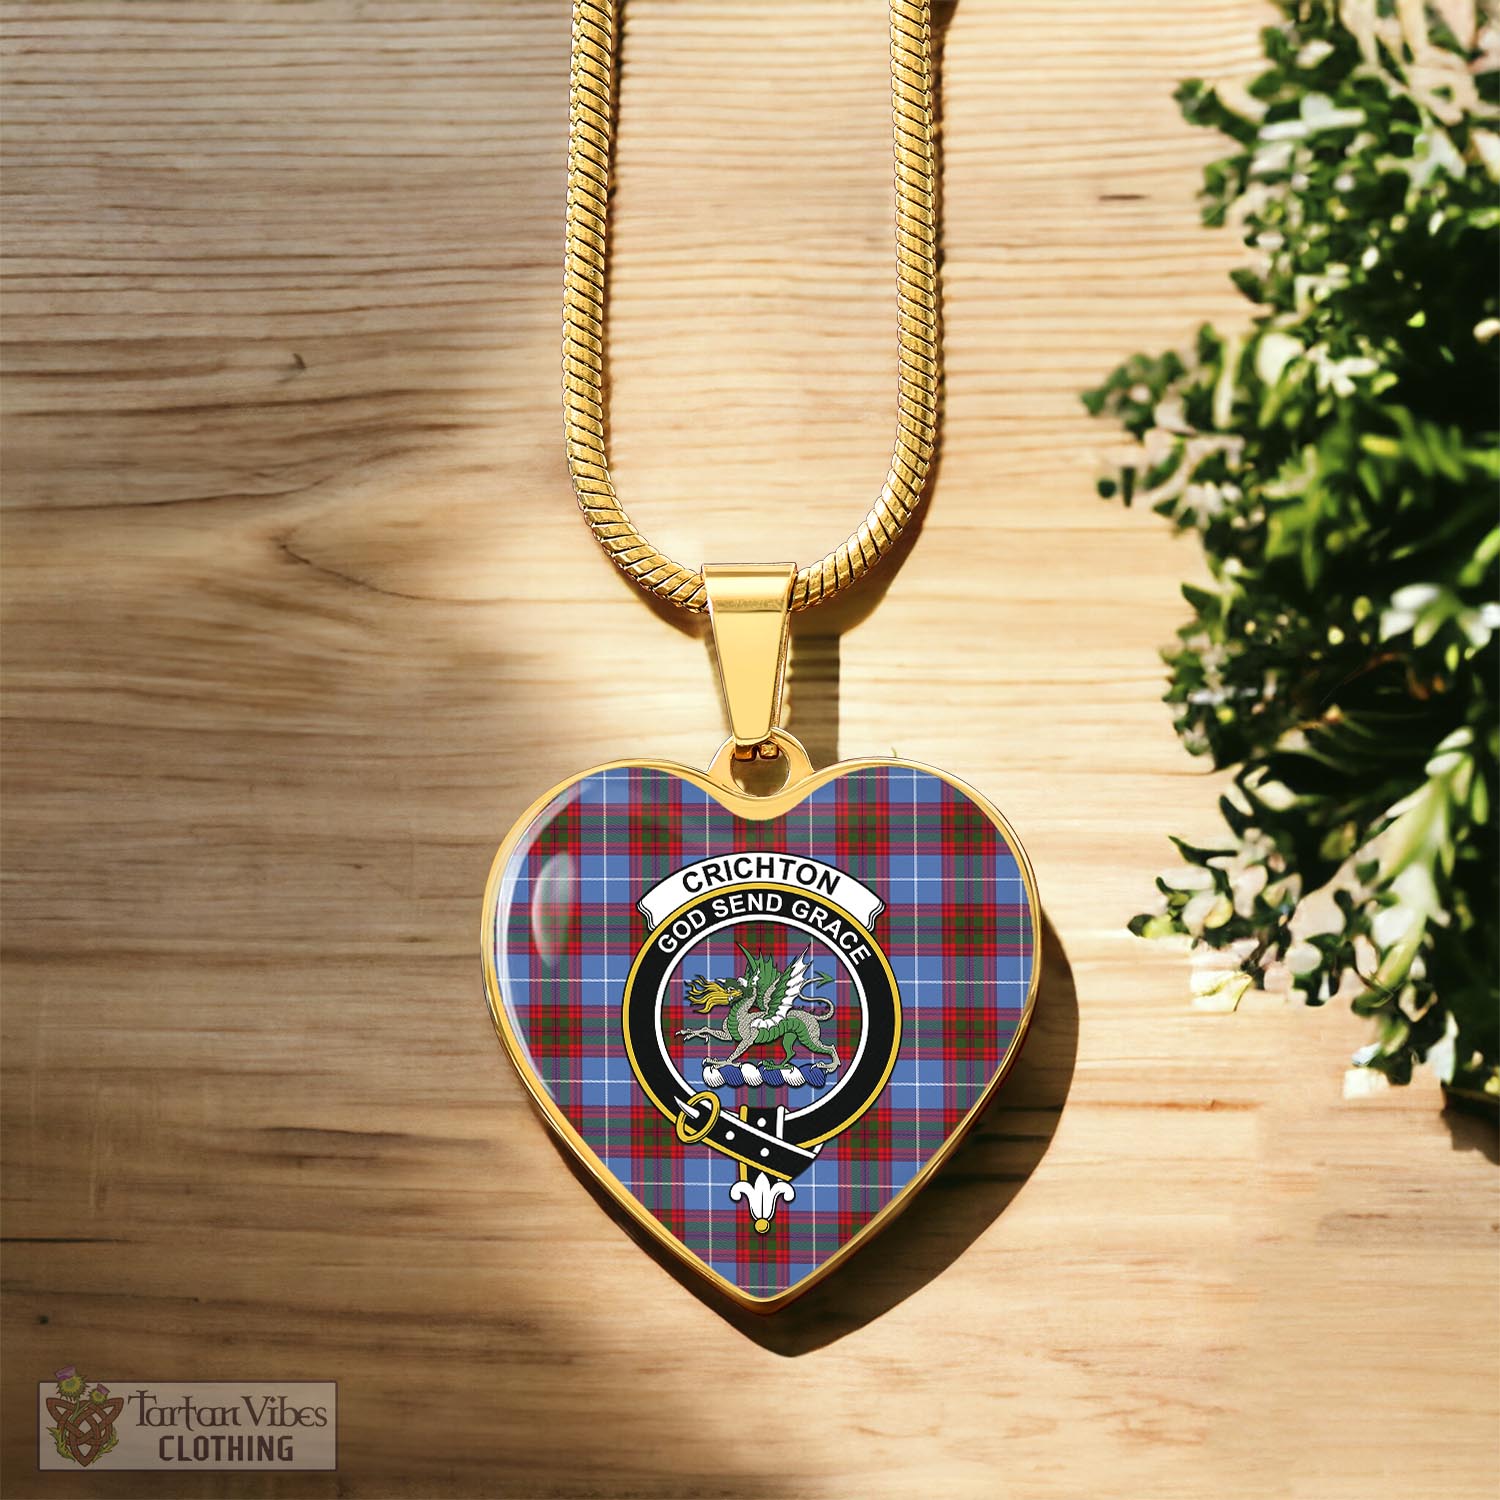 Tartan Vibes Clothing Crichton Tartan Heart Necklace with Family Crest